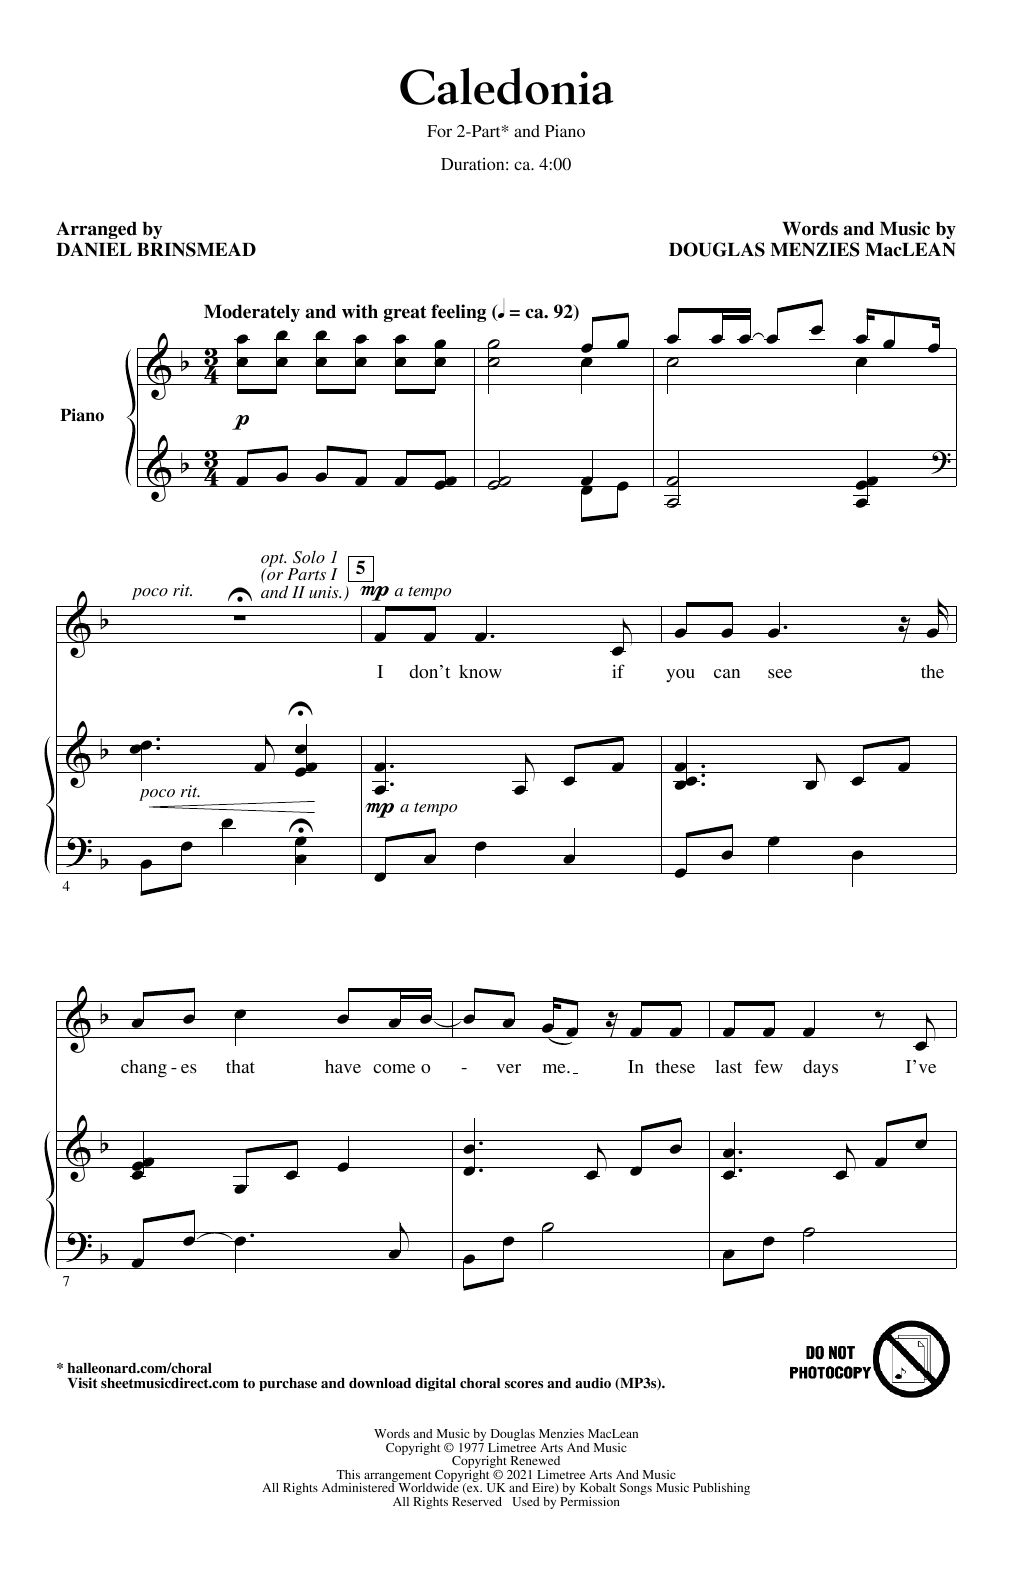 Douglas Menzies MacLean Caledonia (arr. Daniel Brinsmead) Sheet Music Notes & Chords for 2-Part Choir - Download or Print PDF